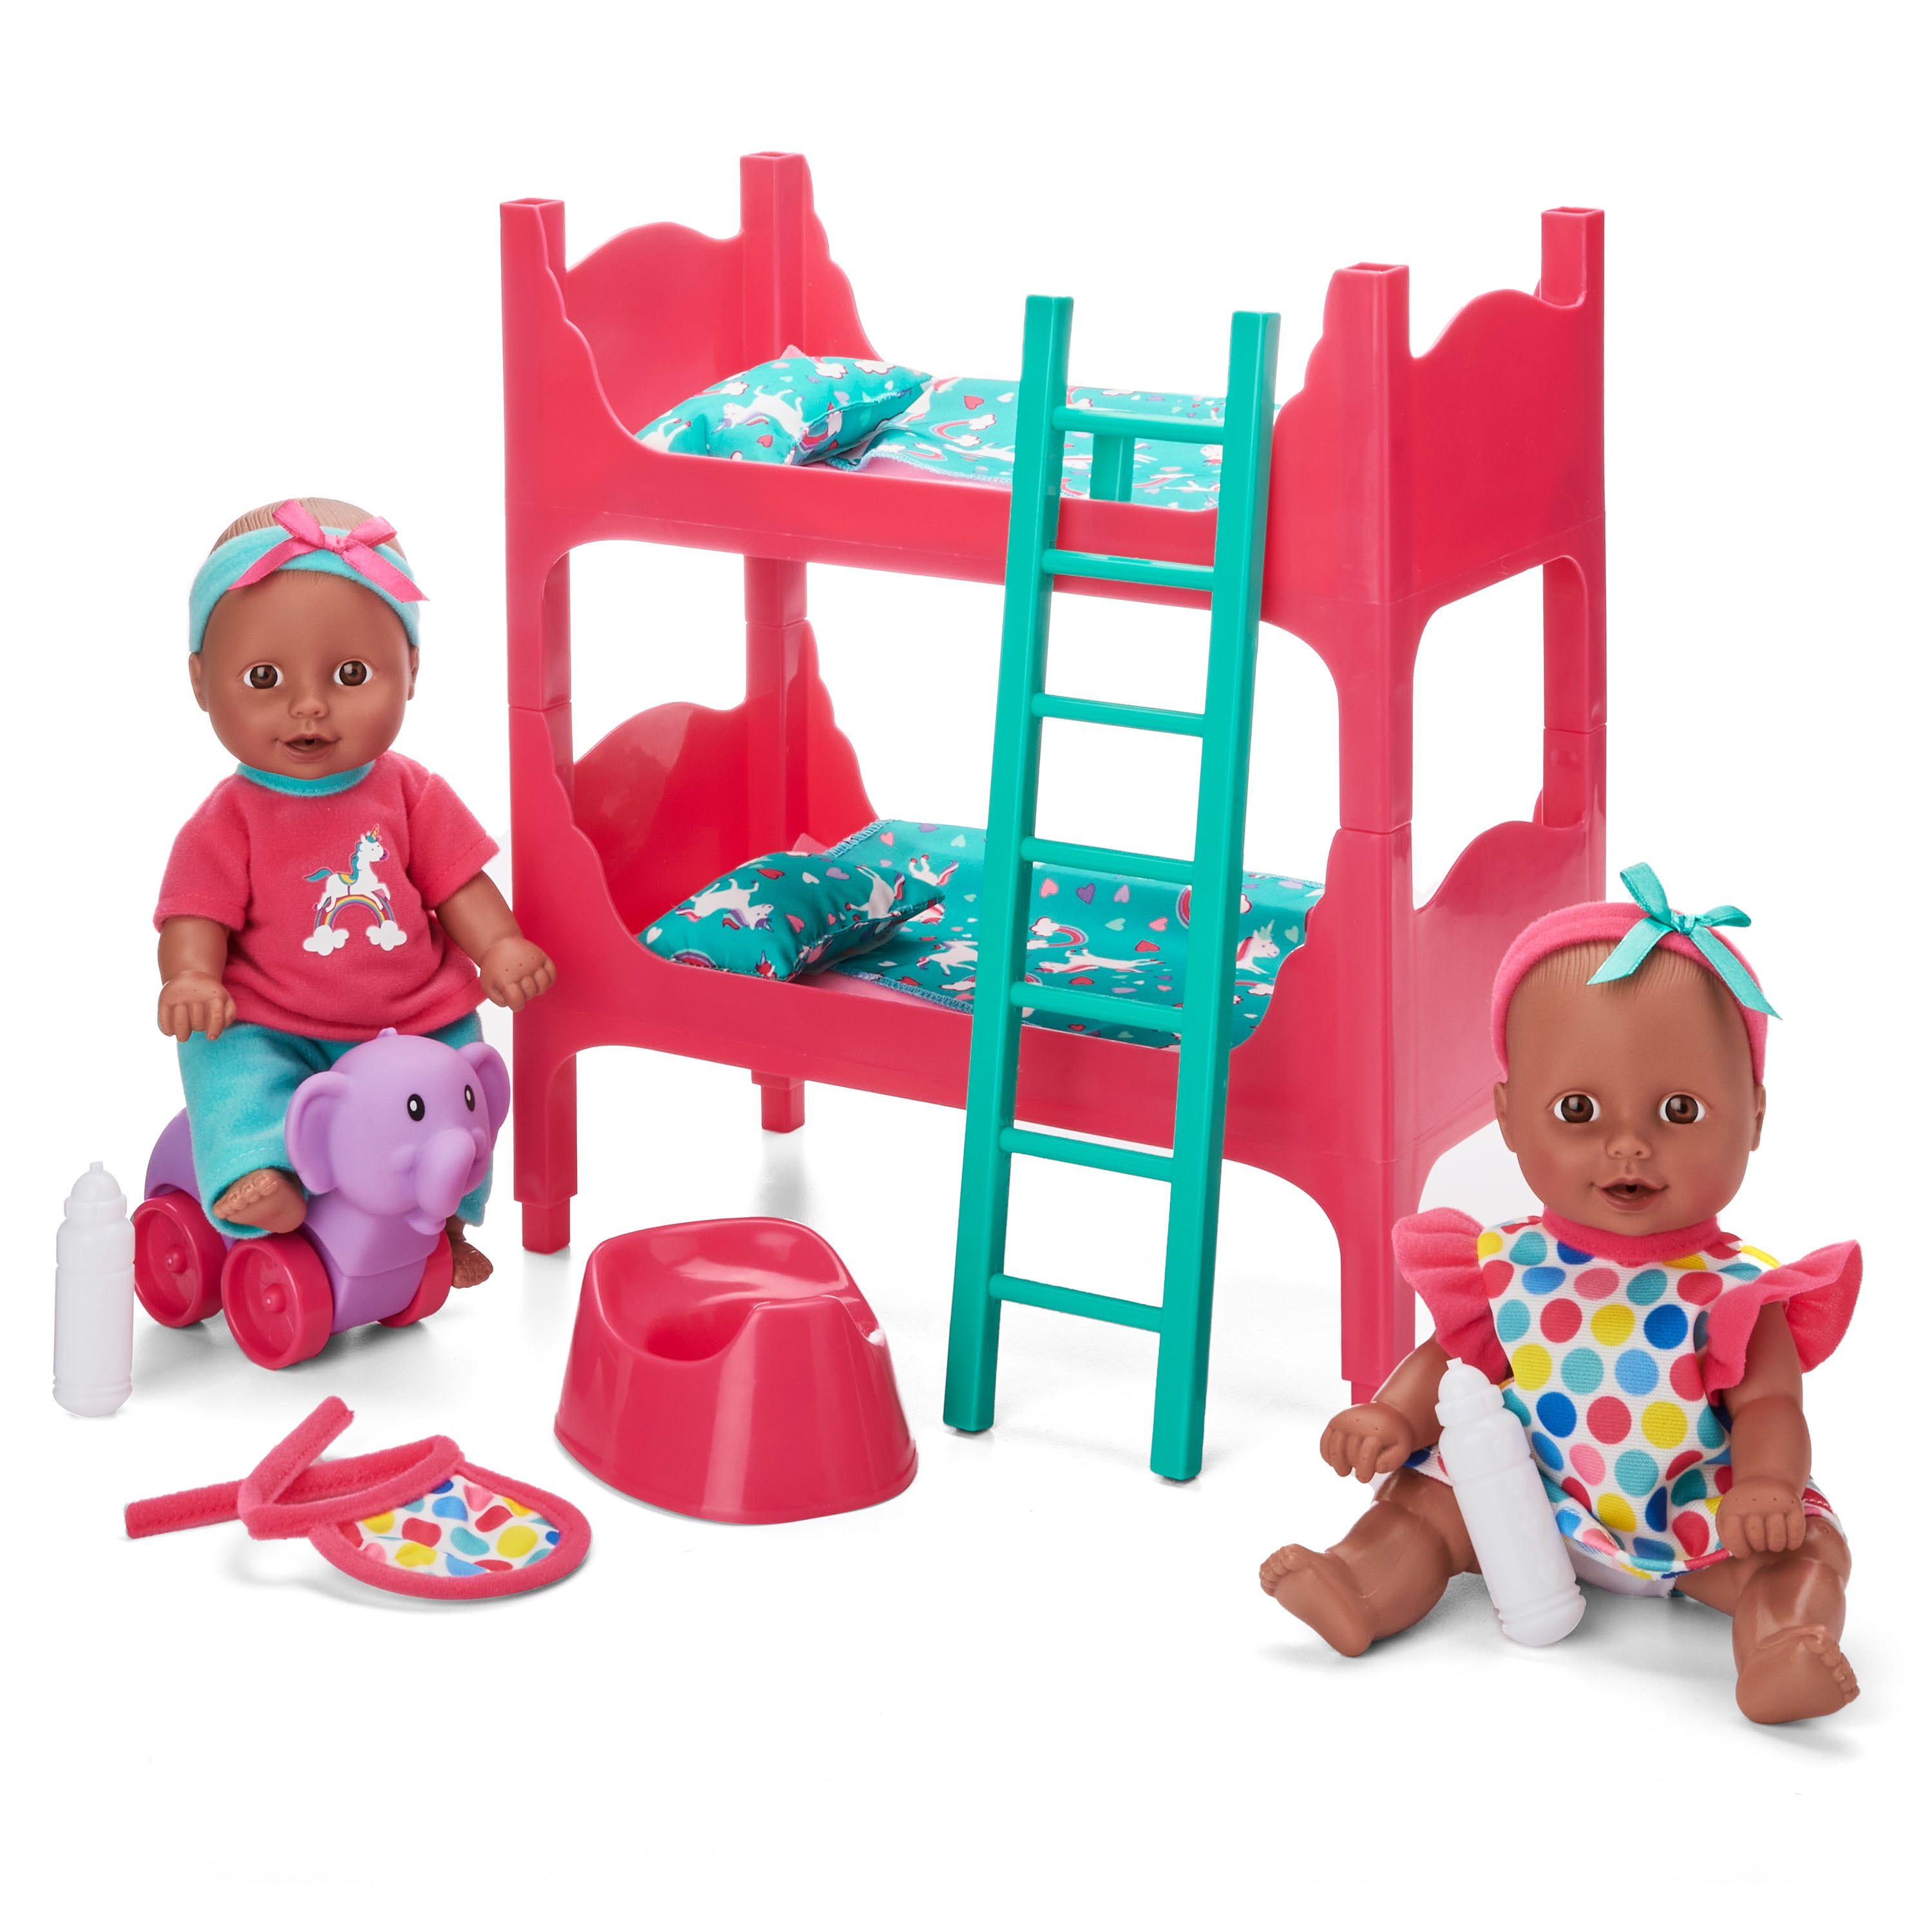 High Qualit Doll Bunk Bed Kids Room Set Toy, 